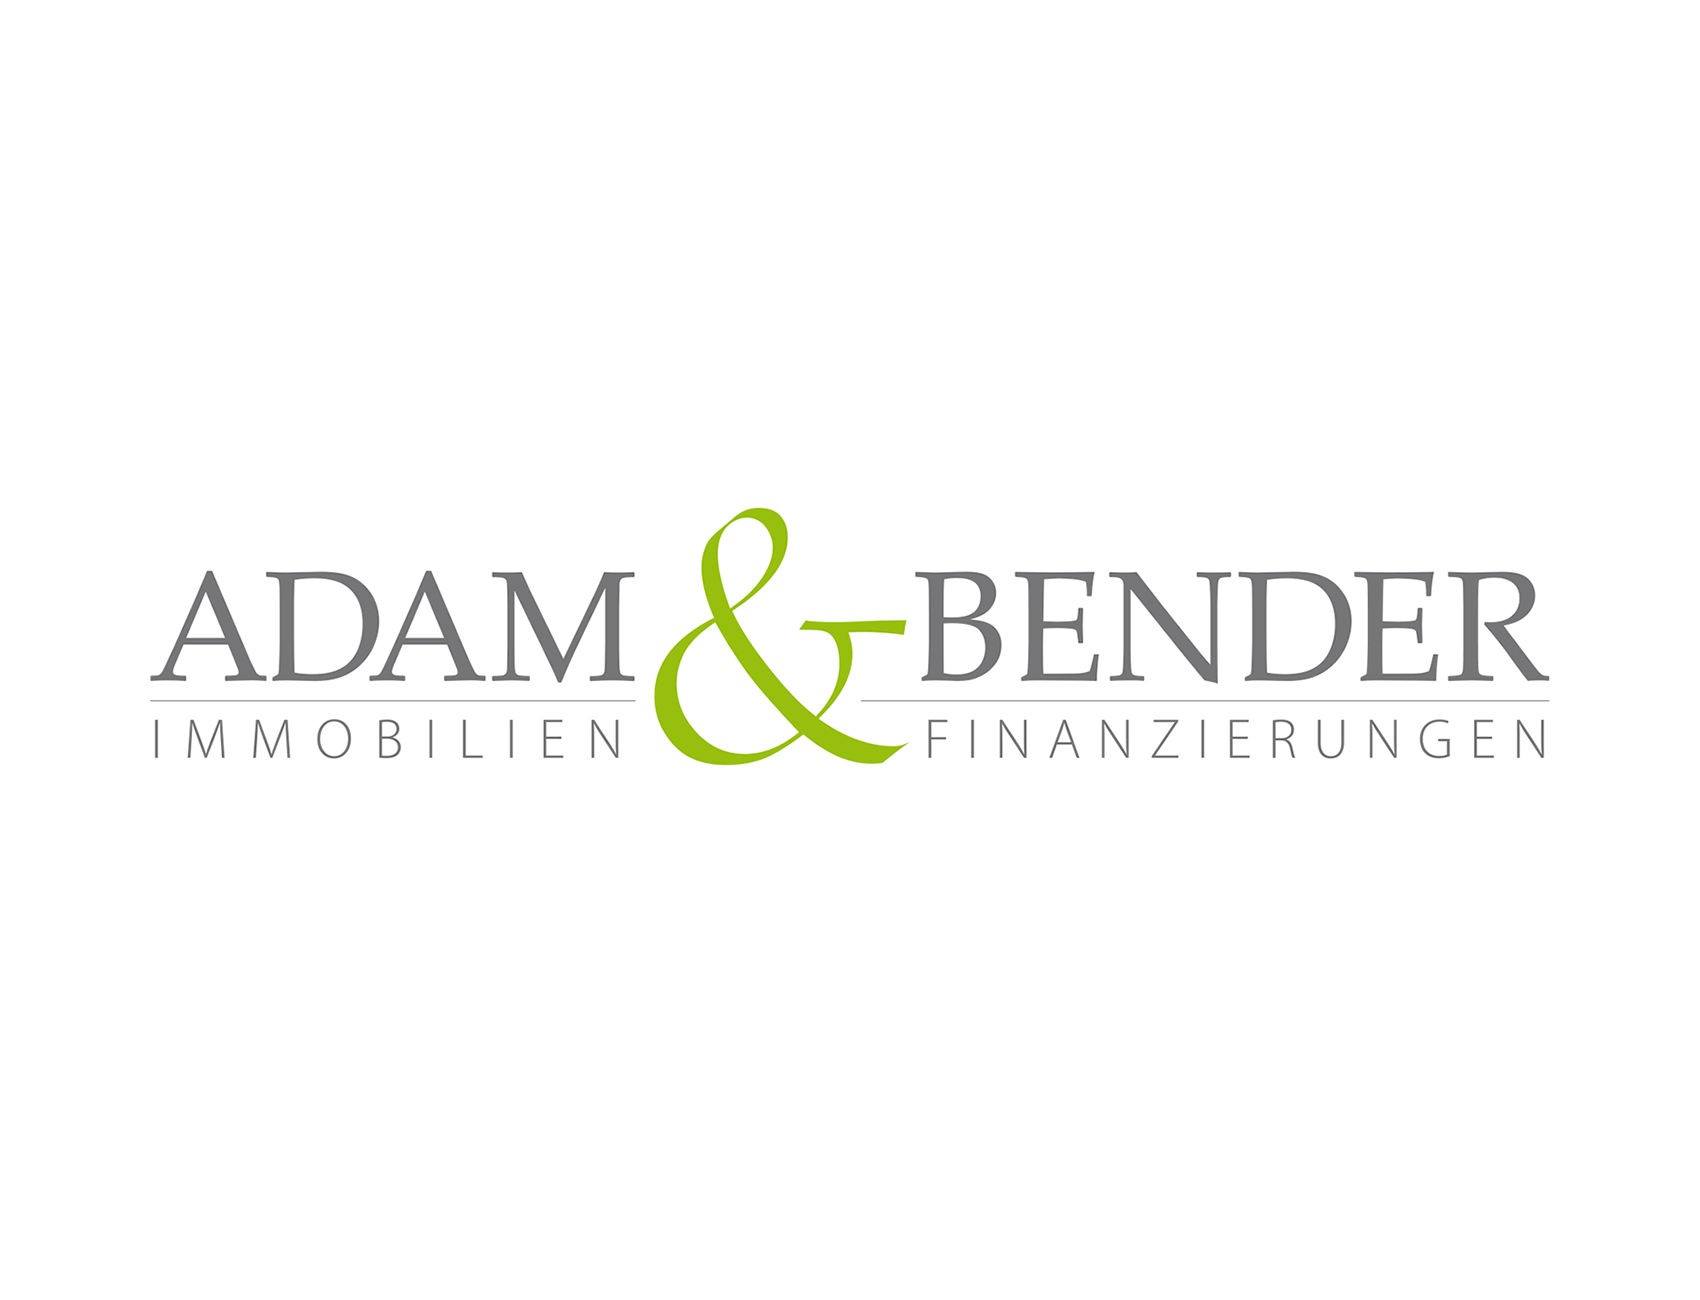 Adam & Bender